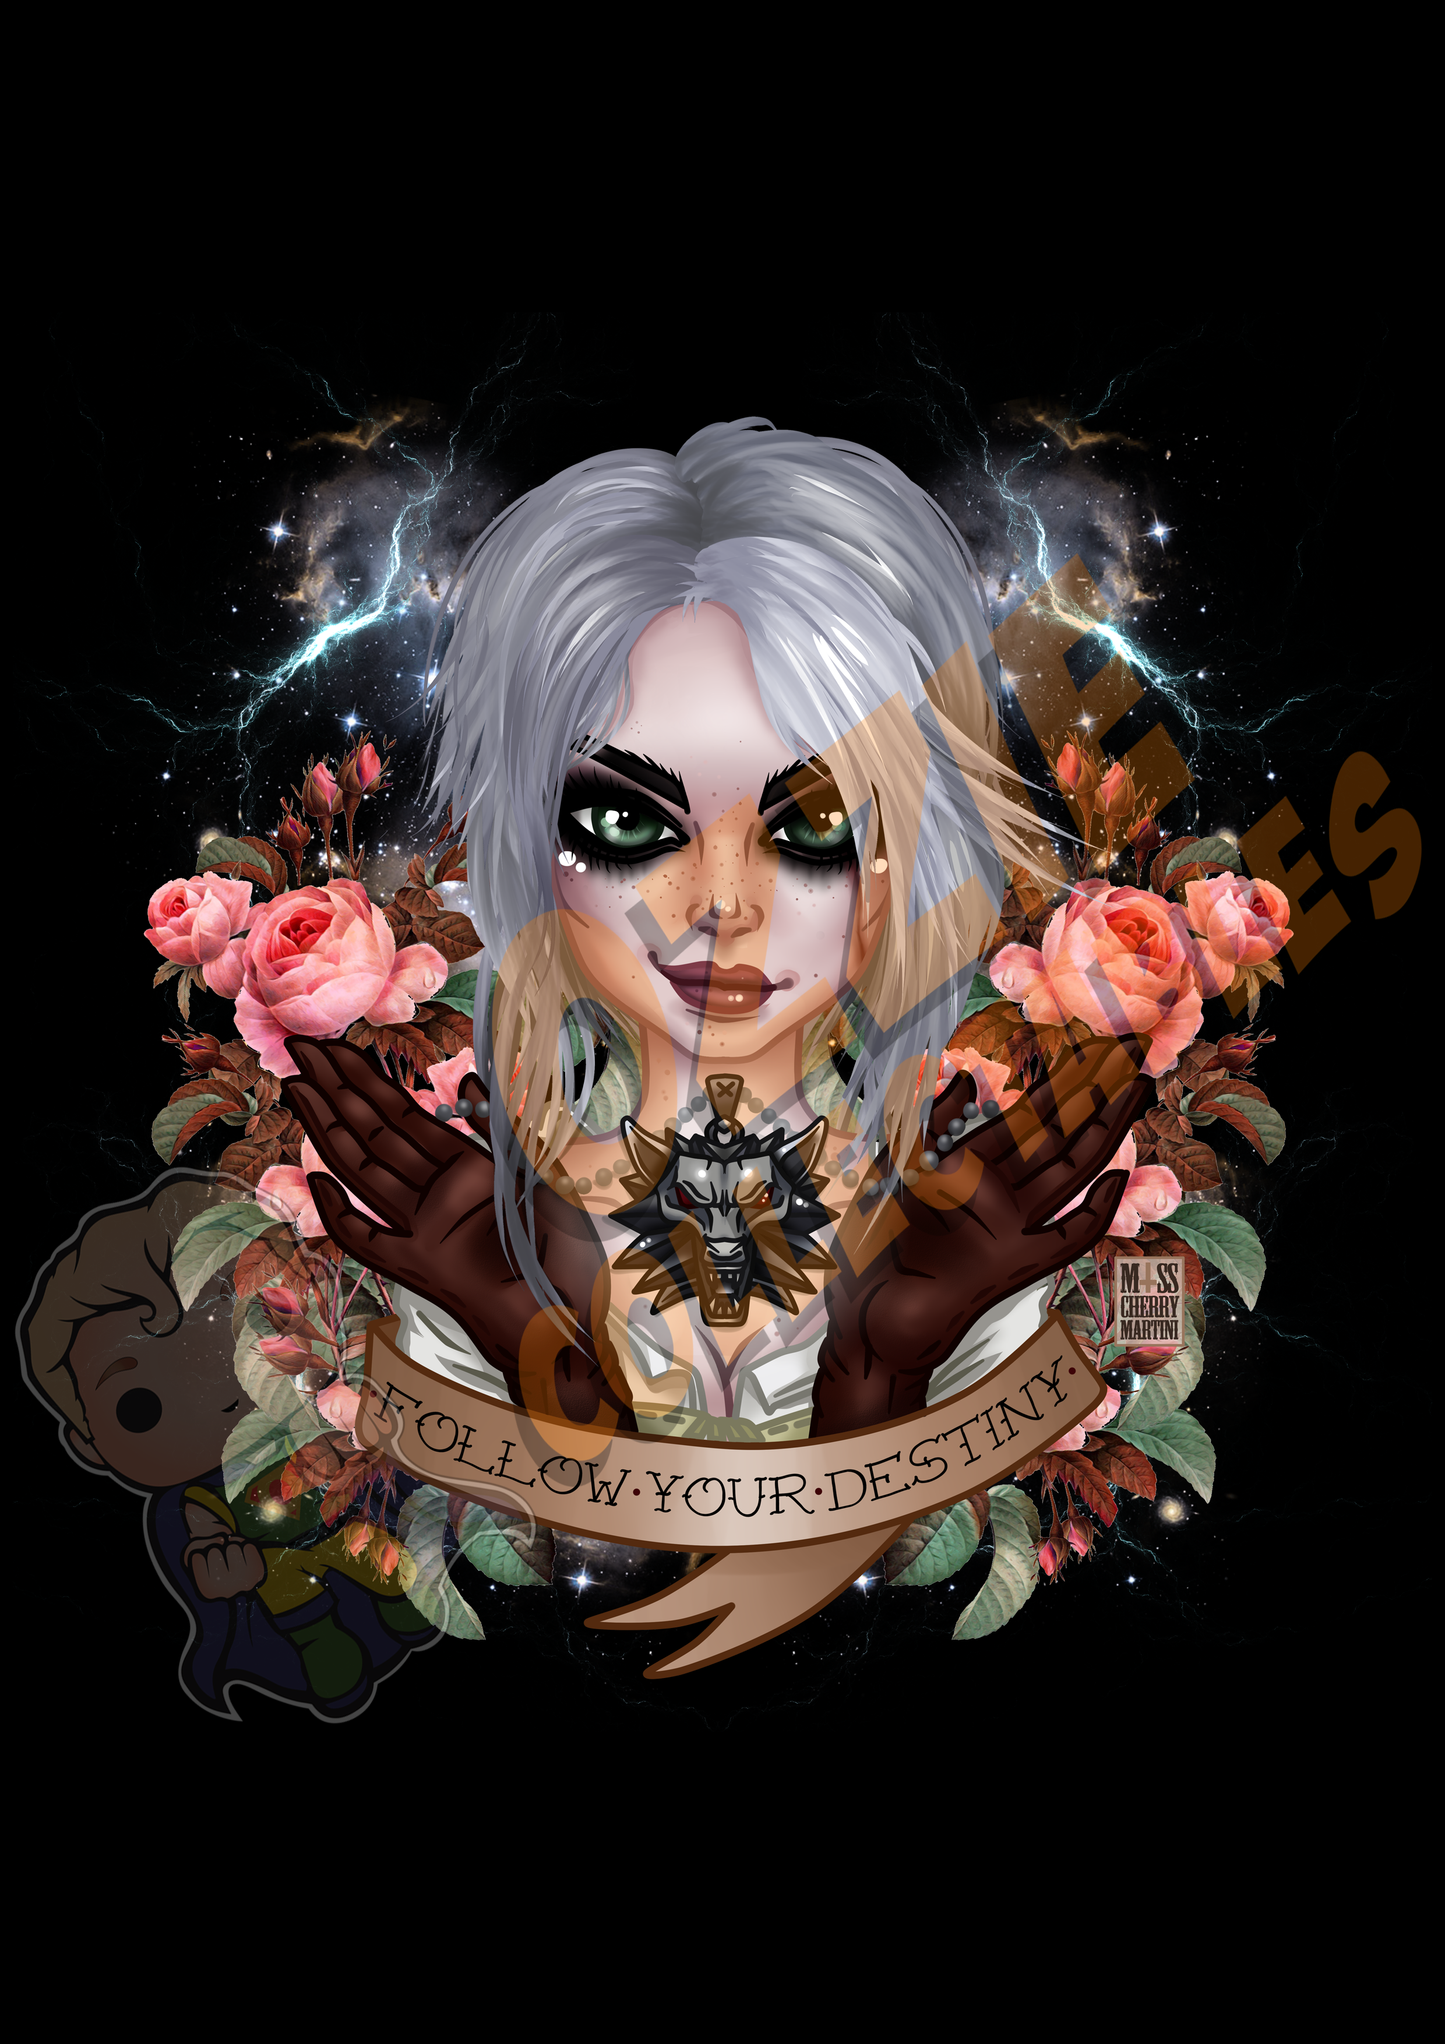 The Witcher - Ciri Follow Your Destiny - Rose Demon Art Print Poster